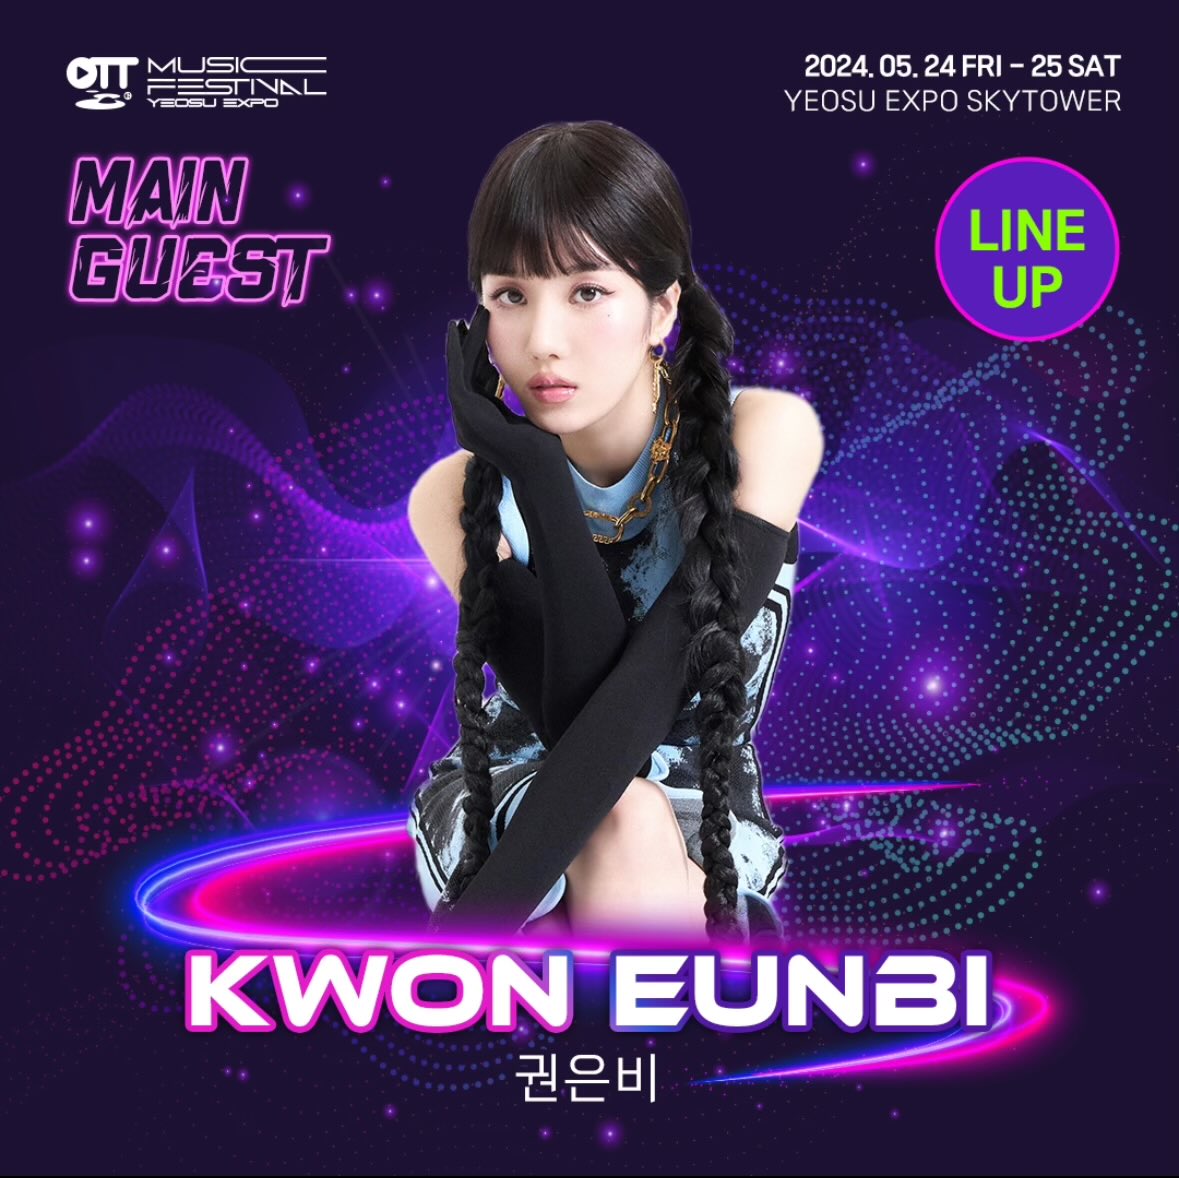 kwon eunbi is in the lineup for yeosu OTT music festival! 🗓️ may 24 (friday) 📍 yeosu expo skytower instagram.com/p/C57l5VYRTyi/… #KWONEUNBI #권은비